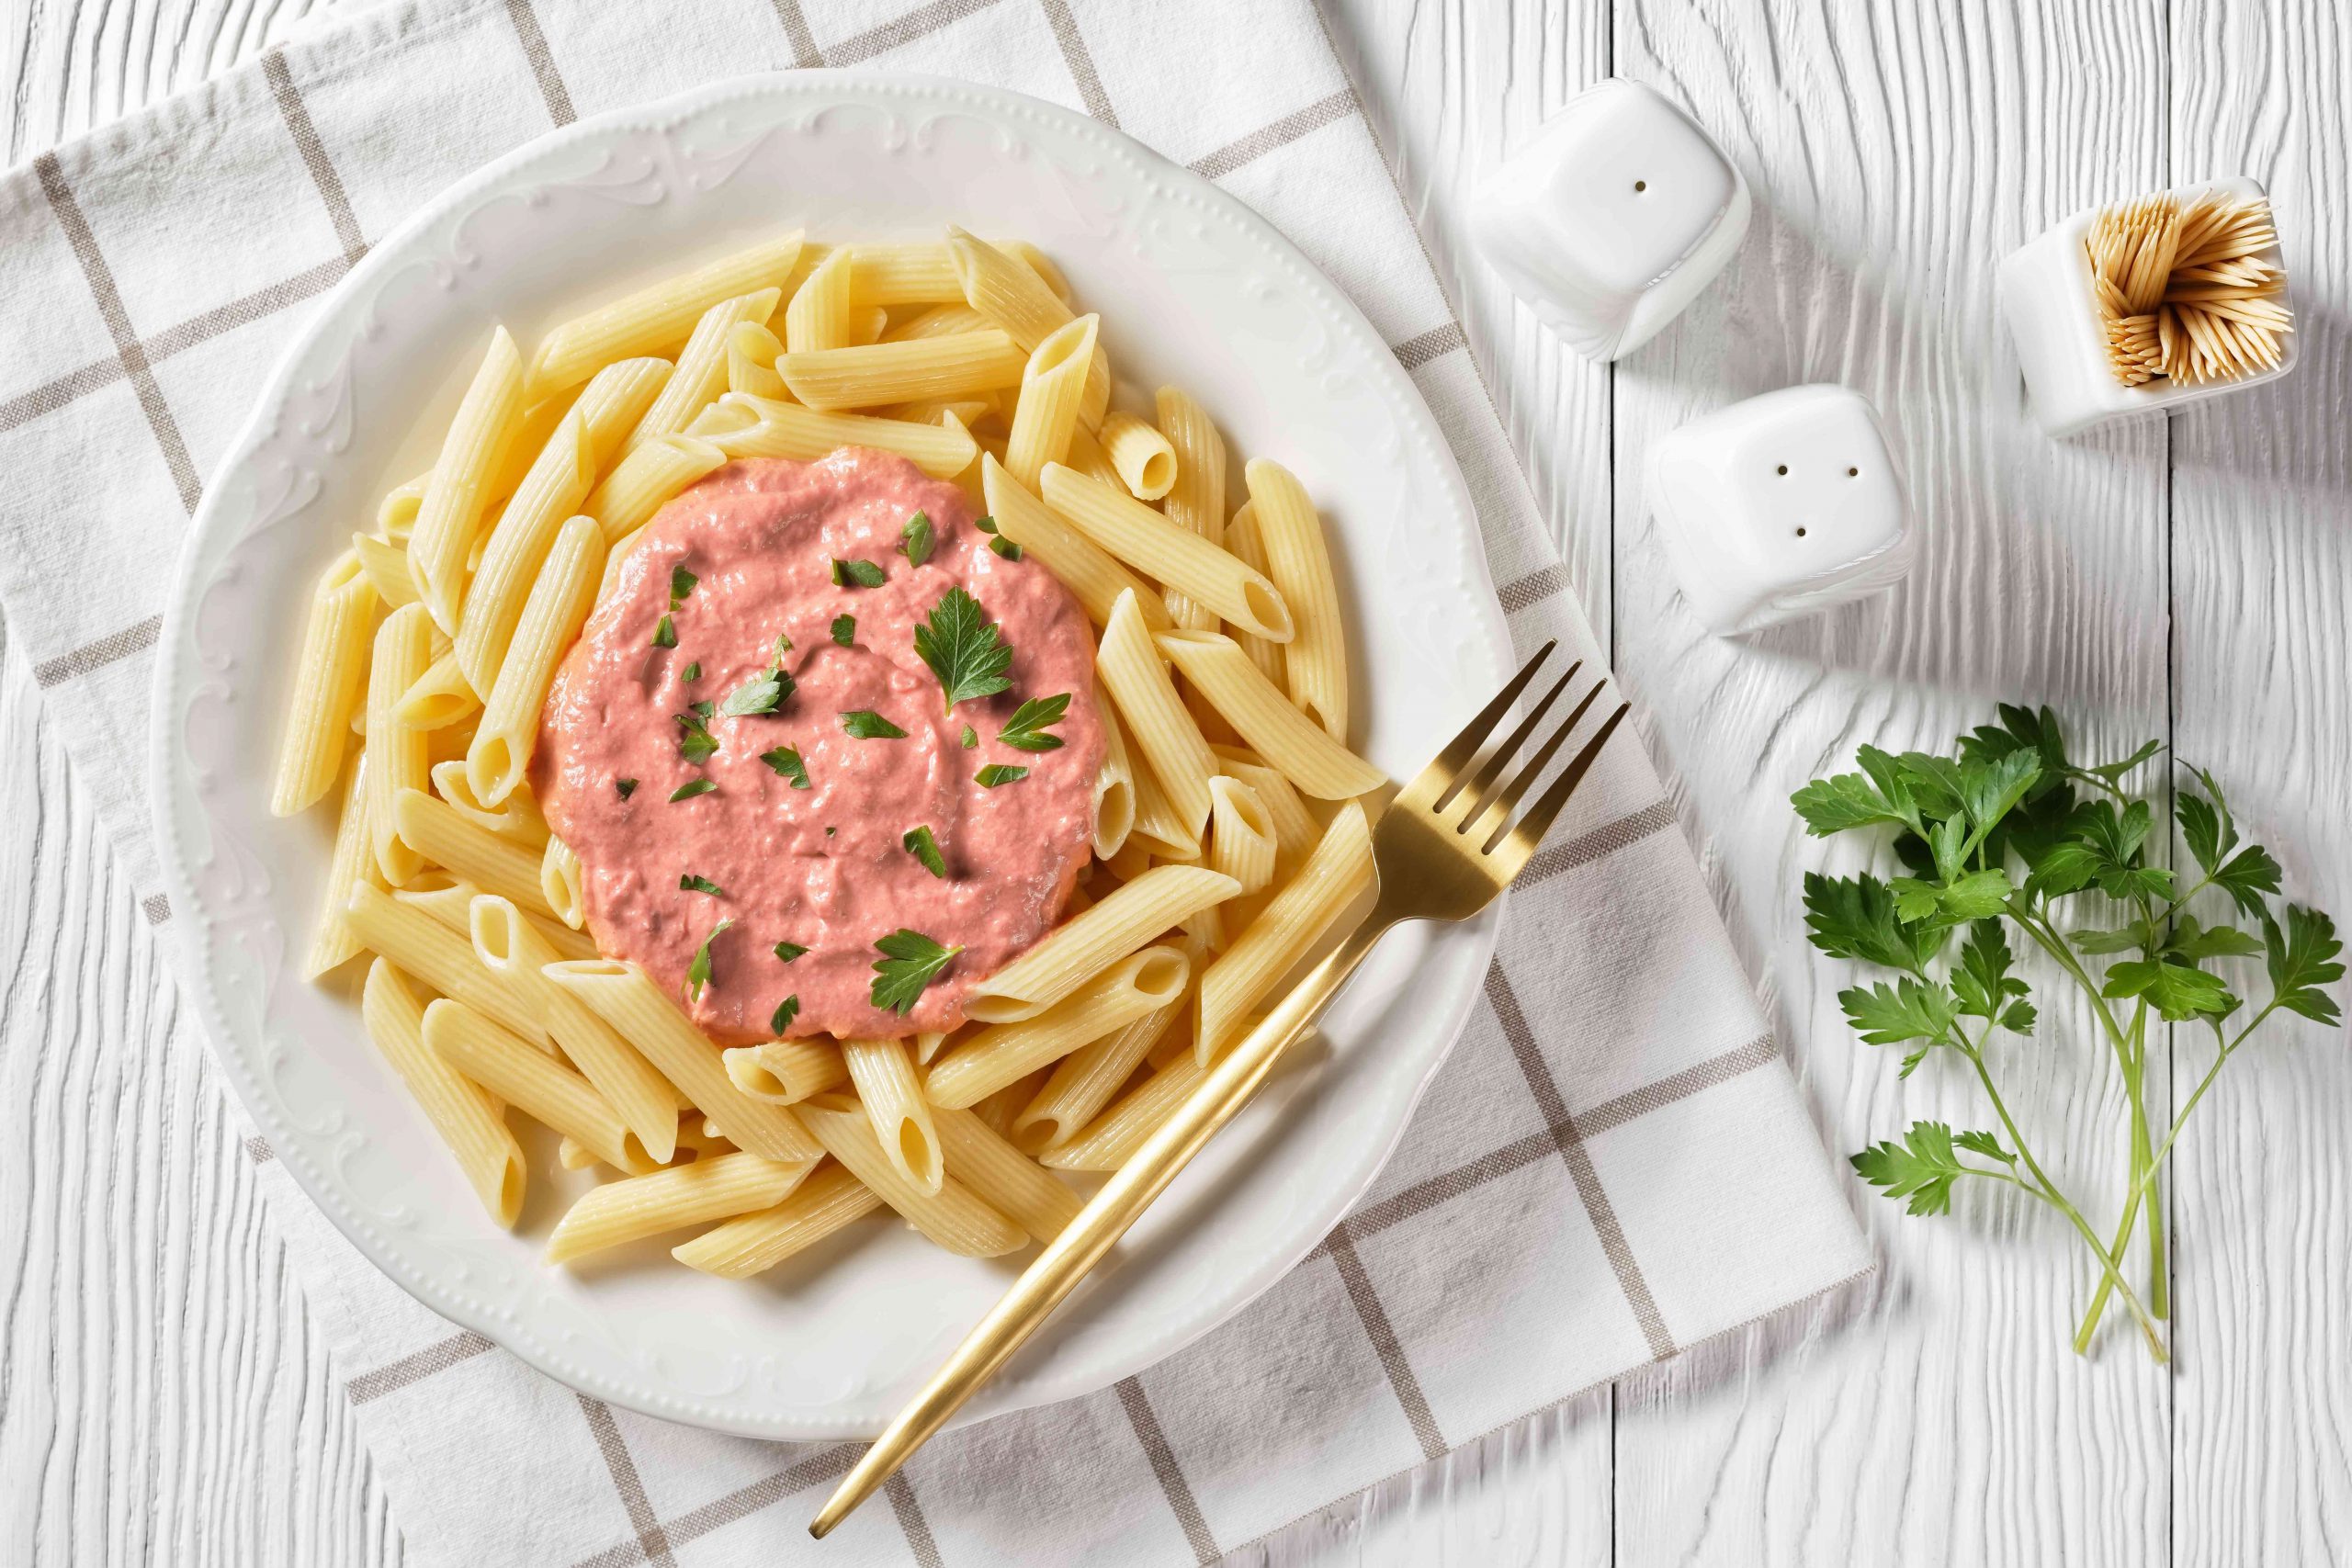 Penne with Italian Pink Sauce Pasta Recipe (Parma Rosa Sauce